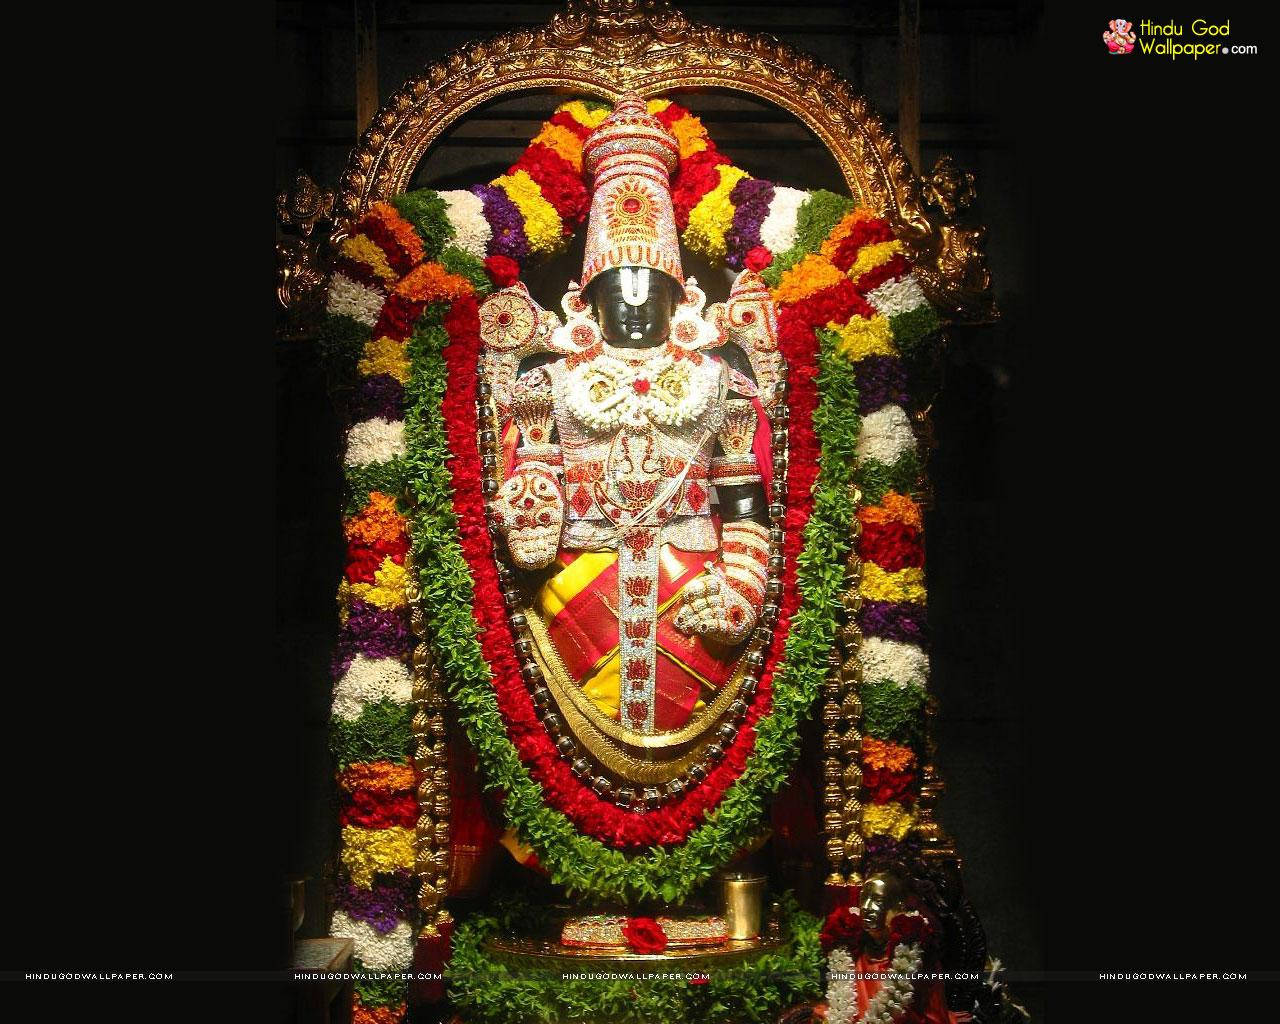 Tirupati Balaji Pilgrimage Site